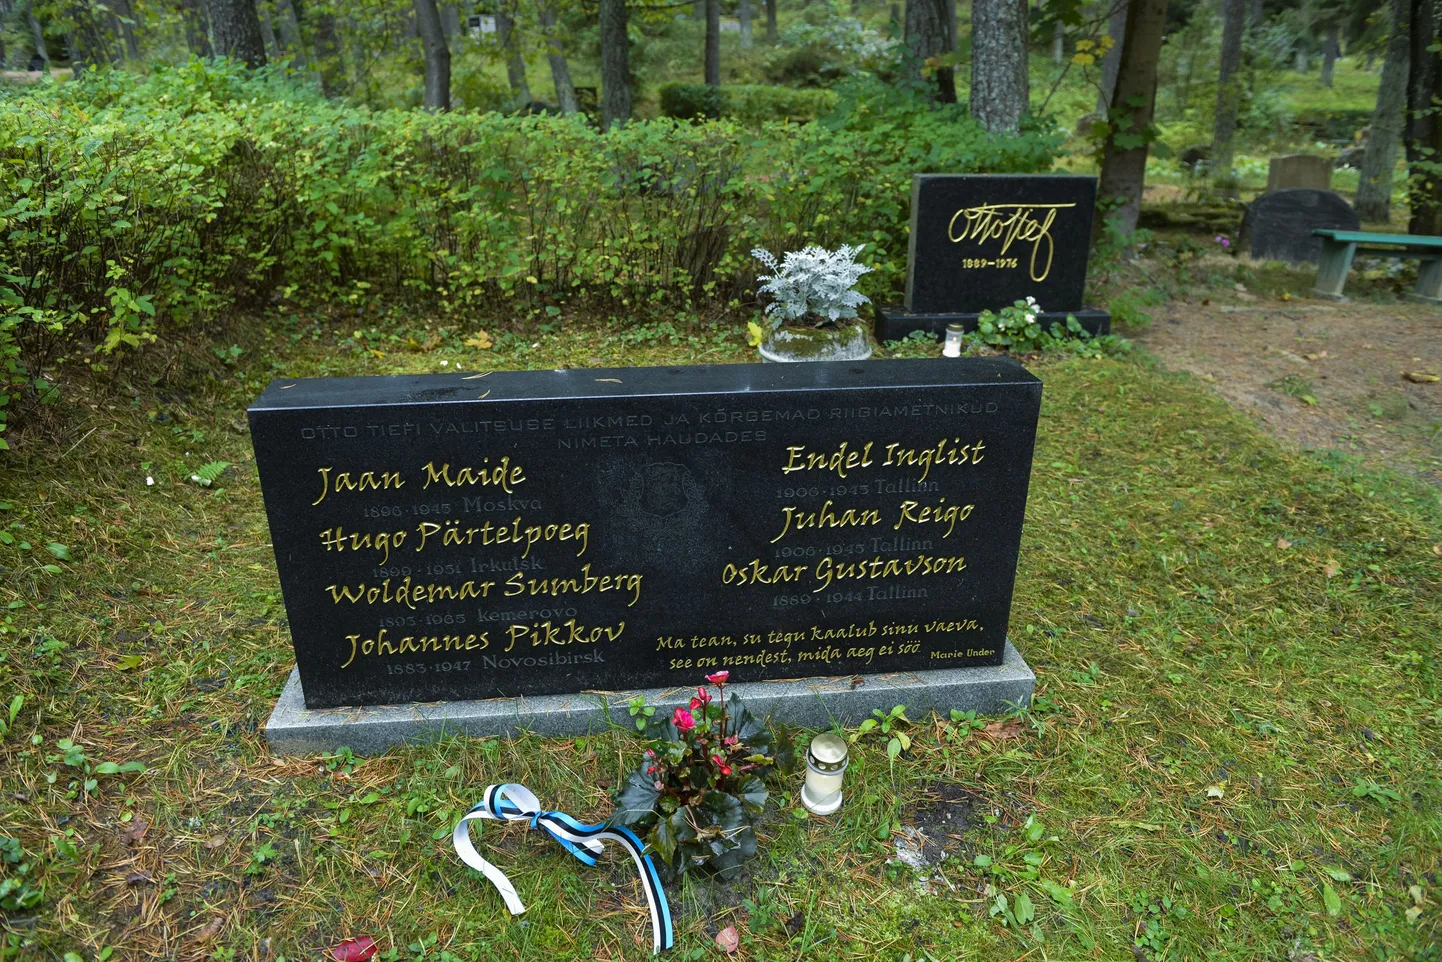 Otto Tiefi valitsuse mälestusmärk Tallinna Metsakalmistul.